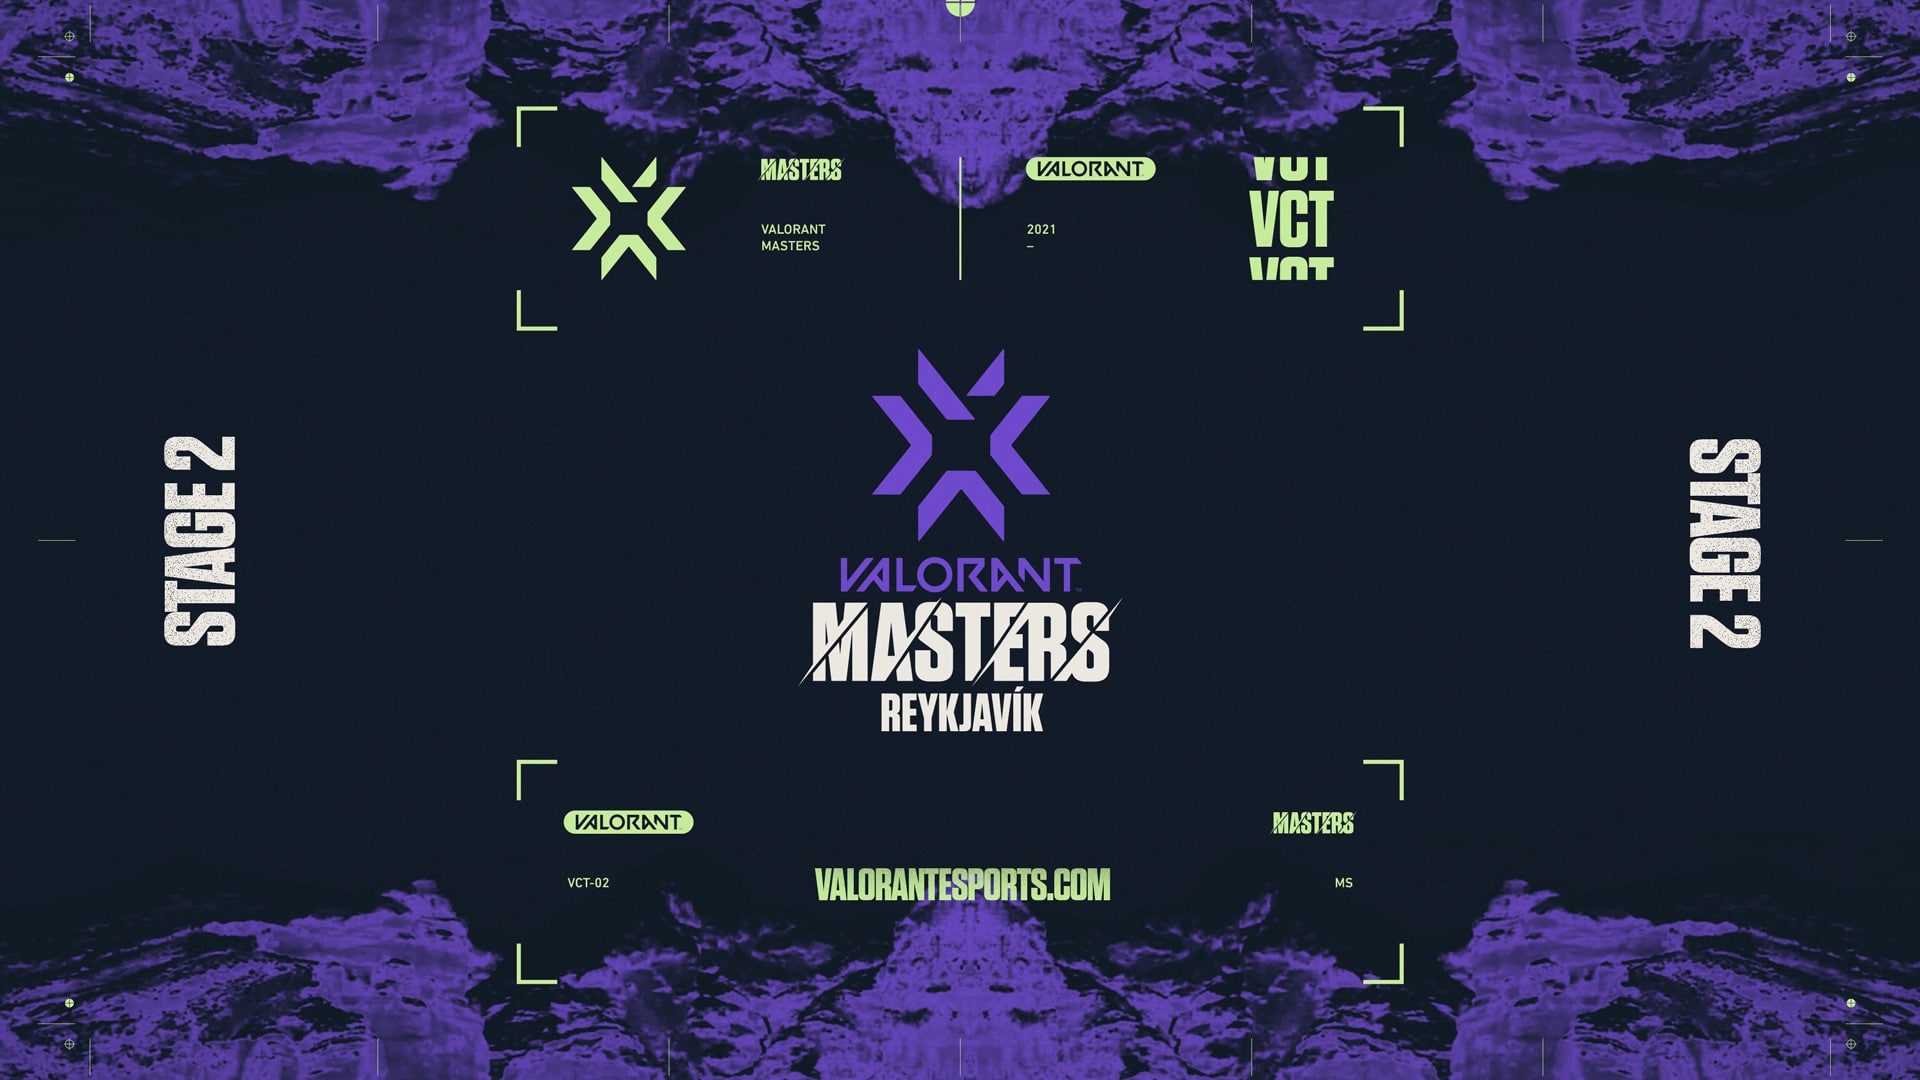 VCT 2021 Masters - Valorant - GamersRD